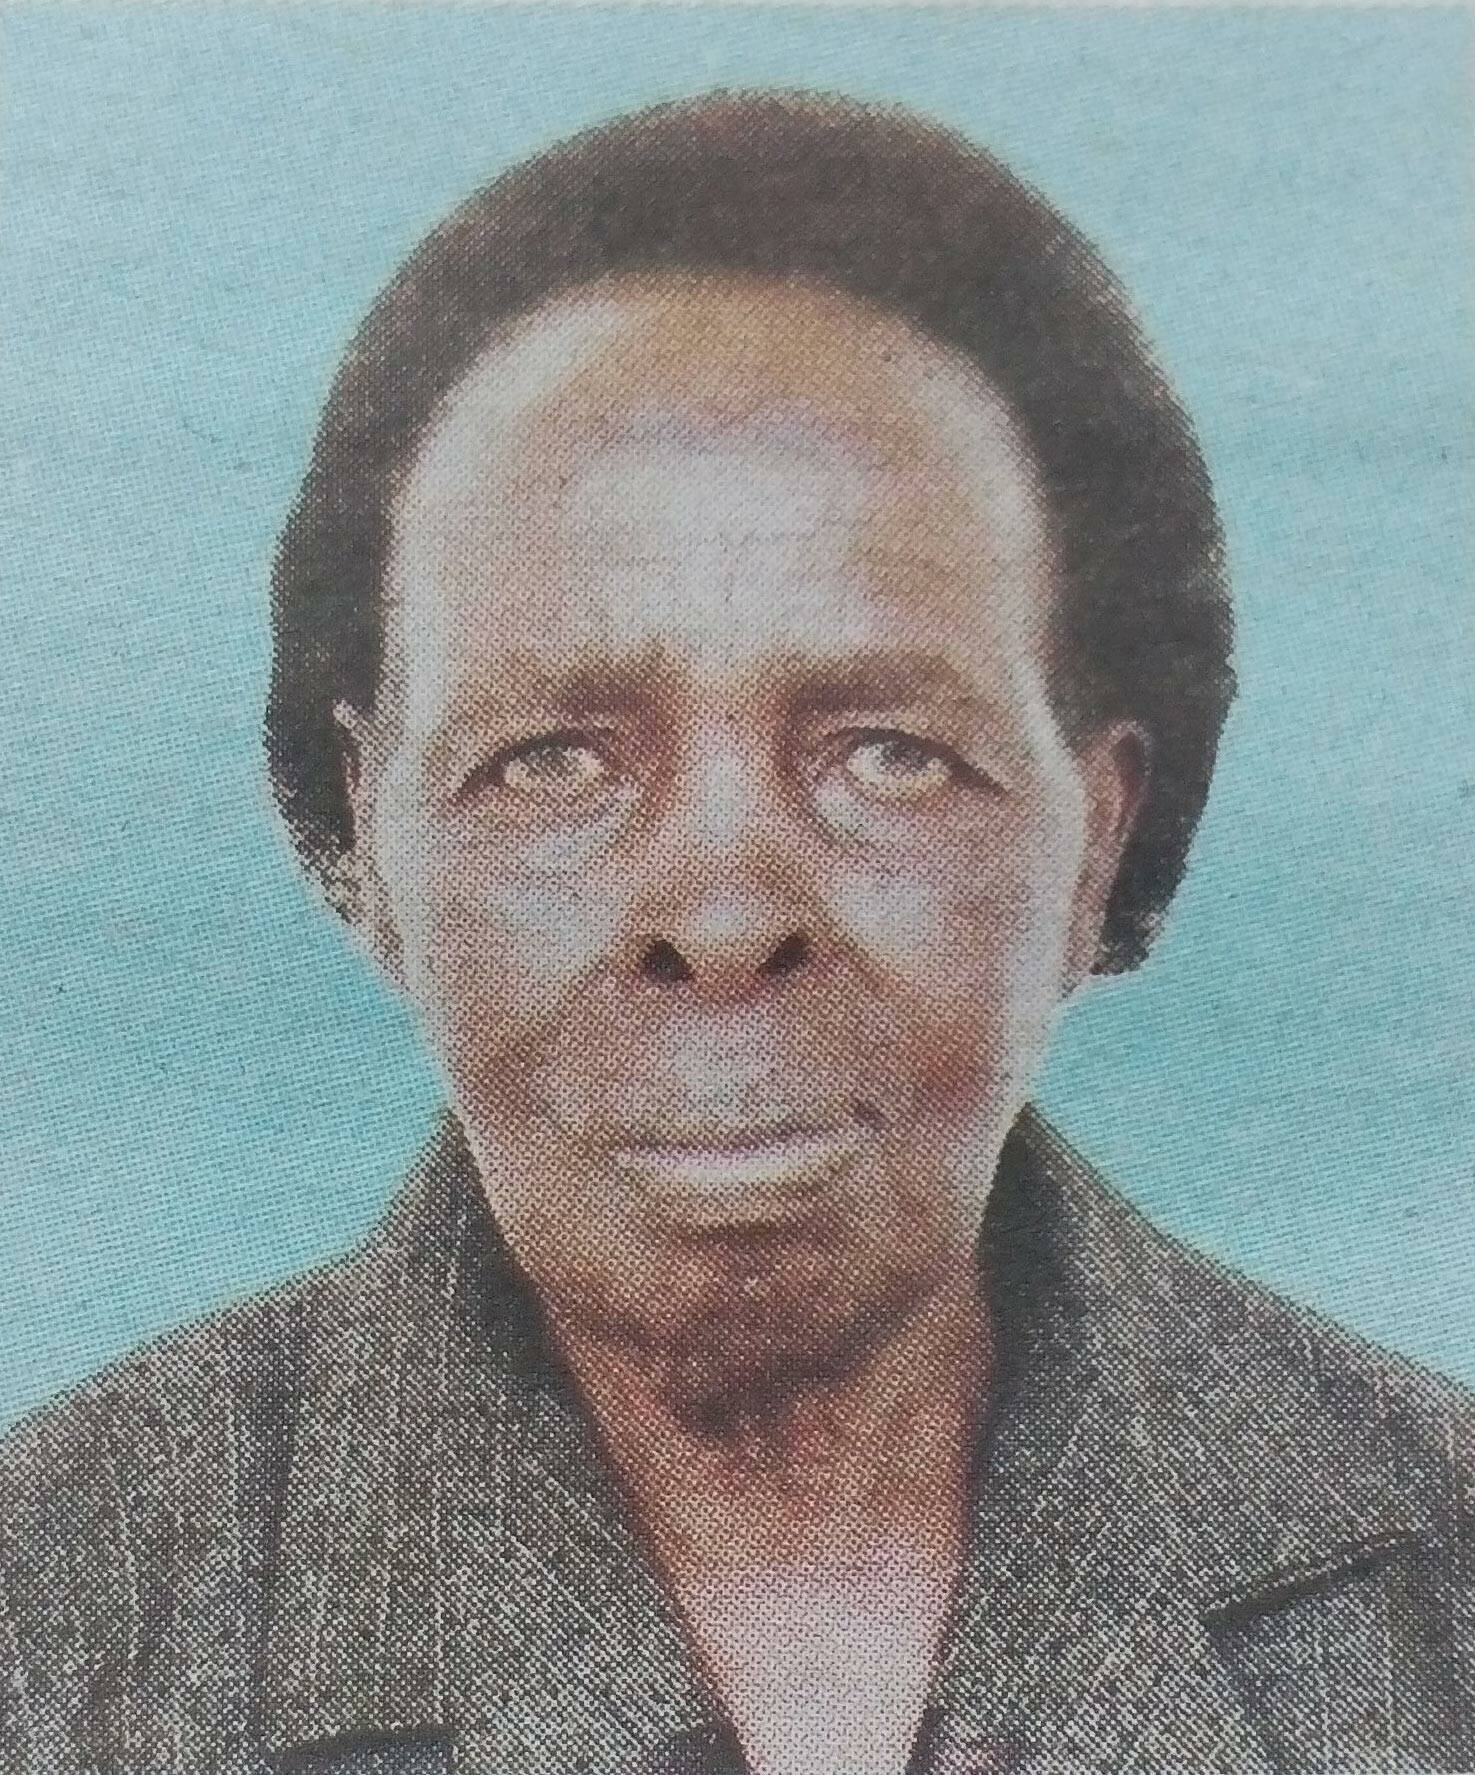 Obituary Image of Sarah Liner Chepngeno Temuge